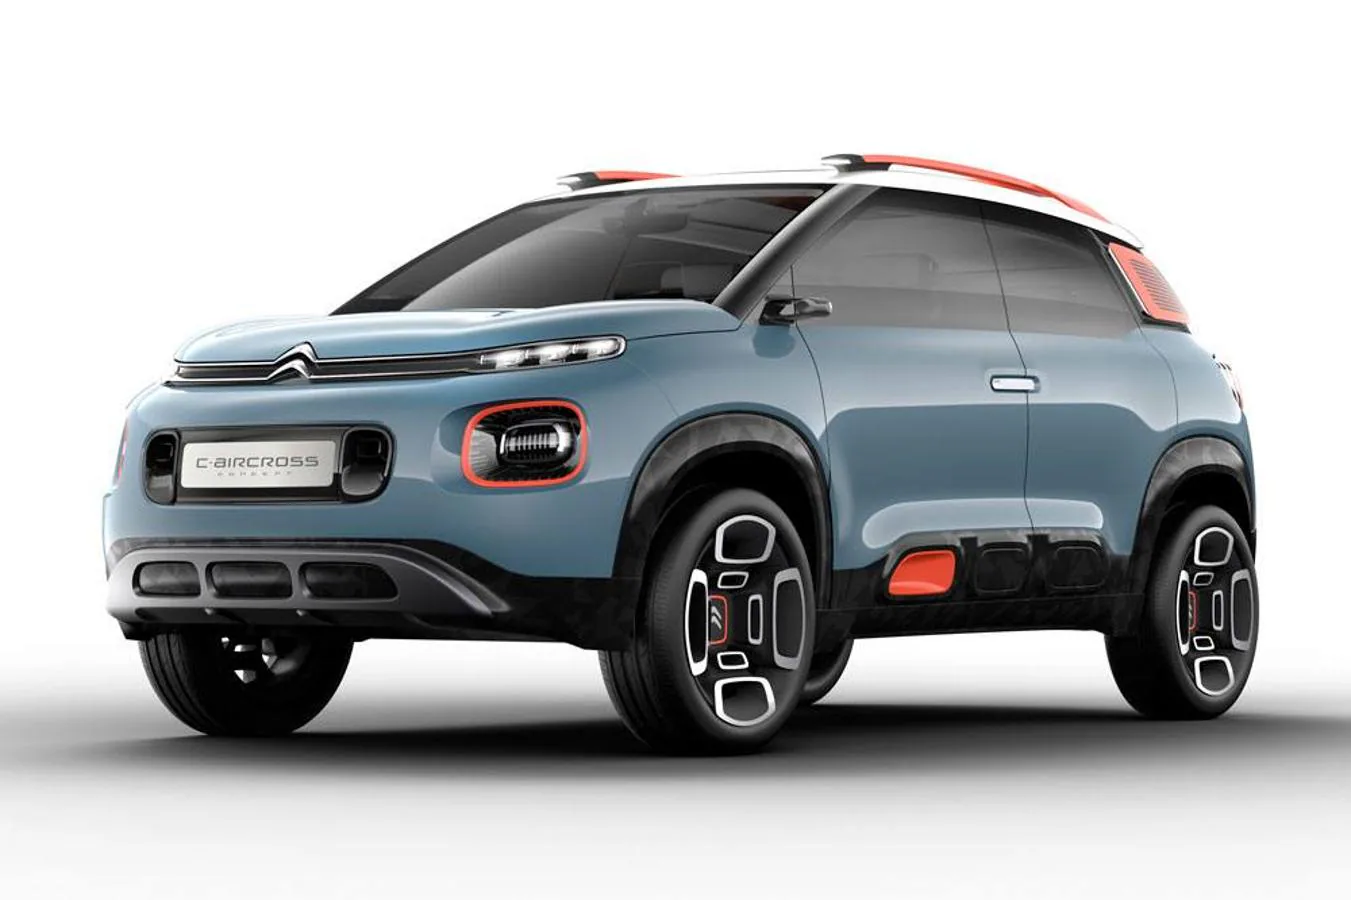 Citroën C-Aircross Concept